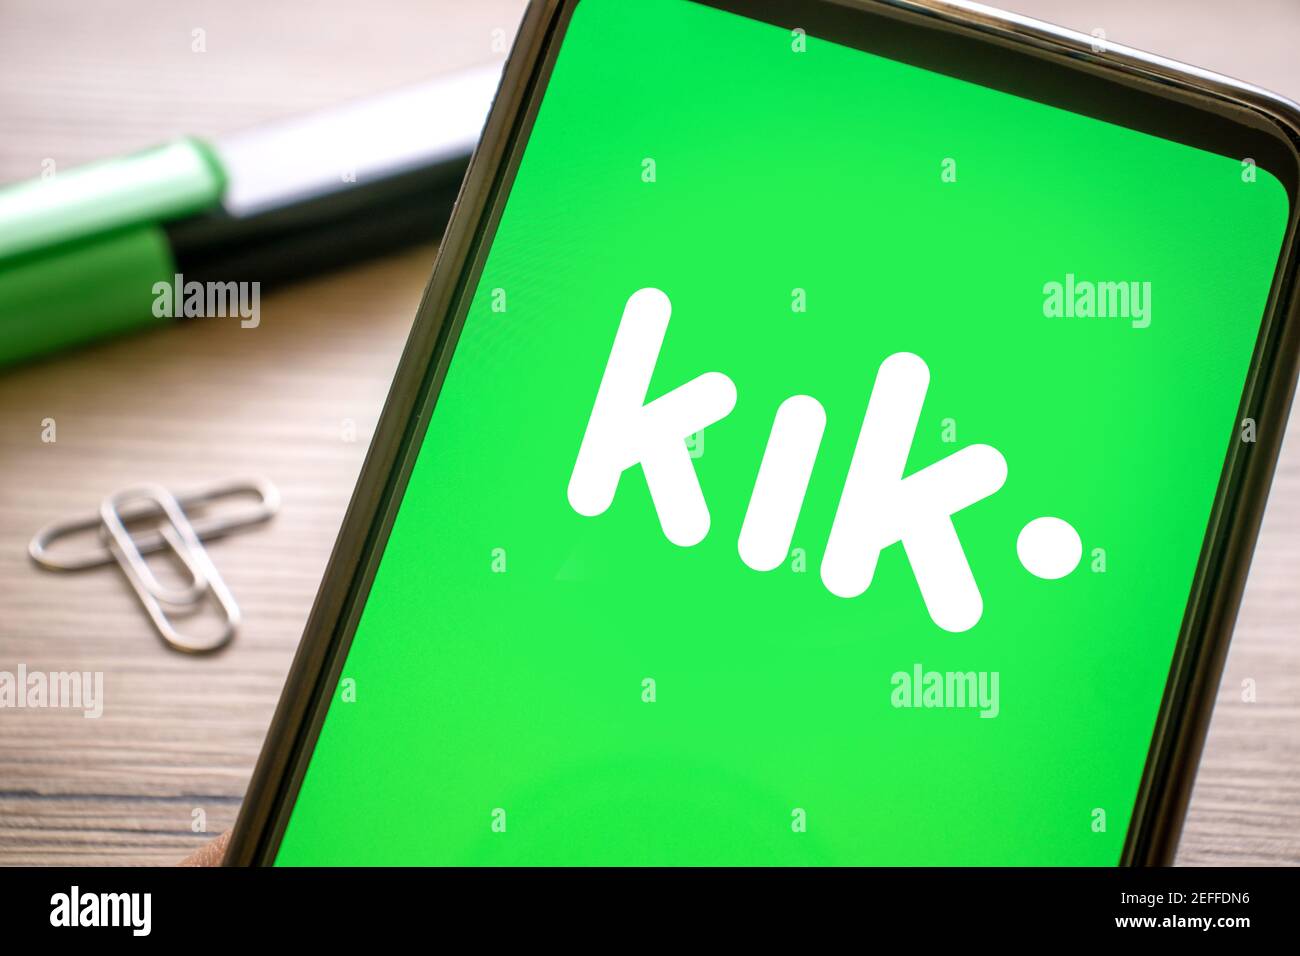 kik logo on the green screen of a smartphone. Messaging app on phone.  Italy, Verona, 17-02-21 Stock Photo - Alamy